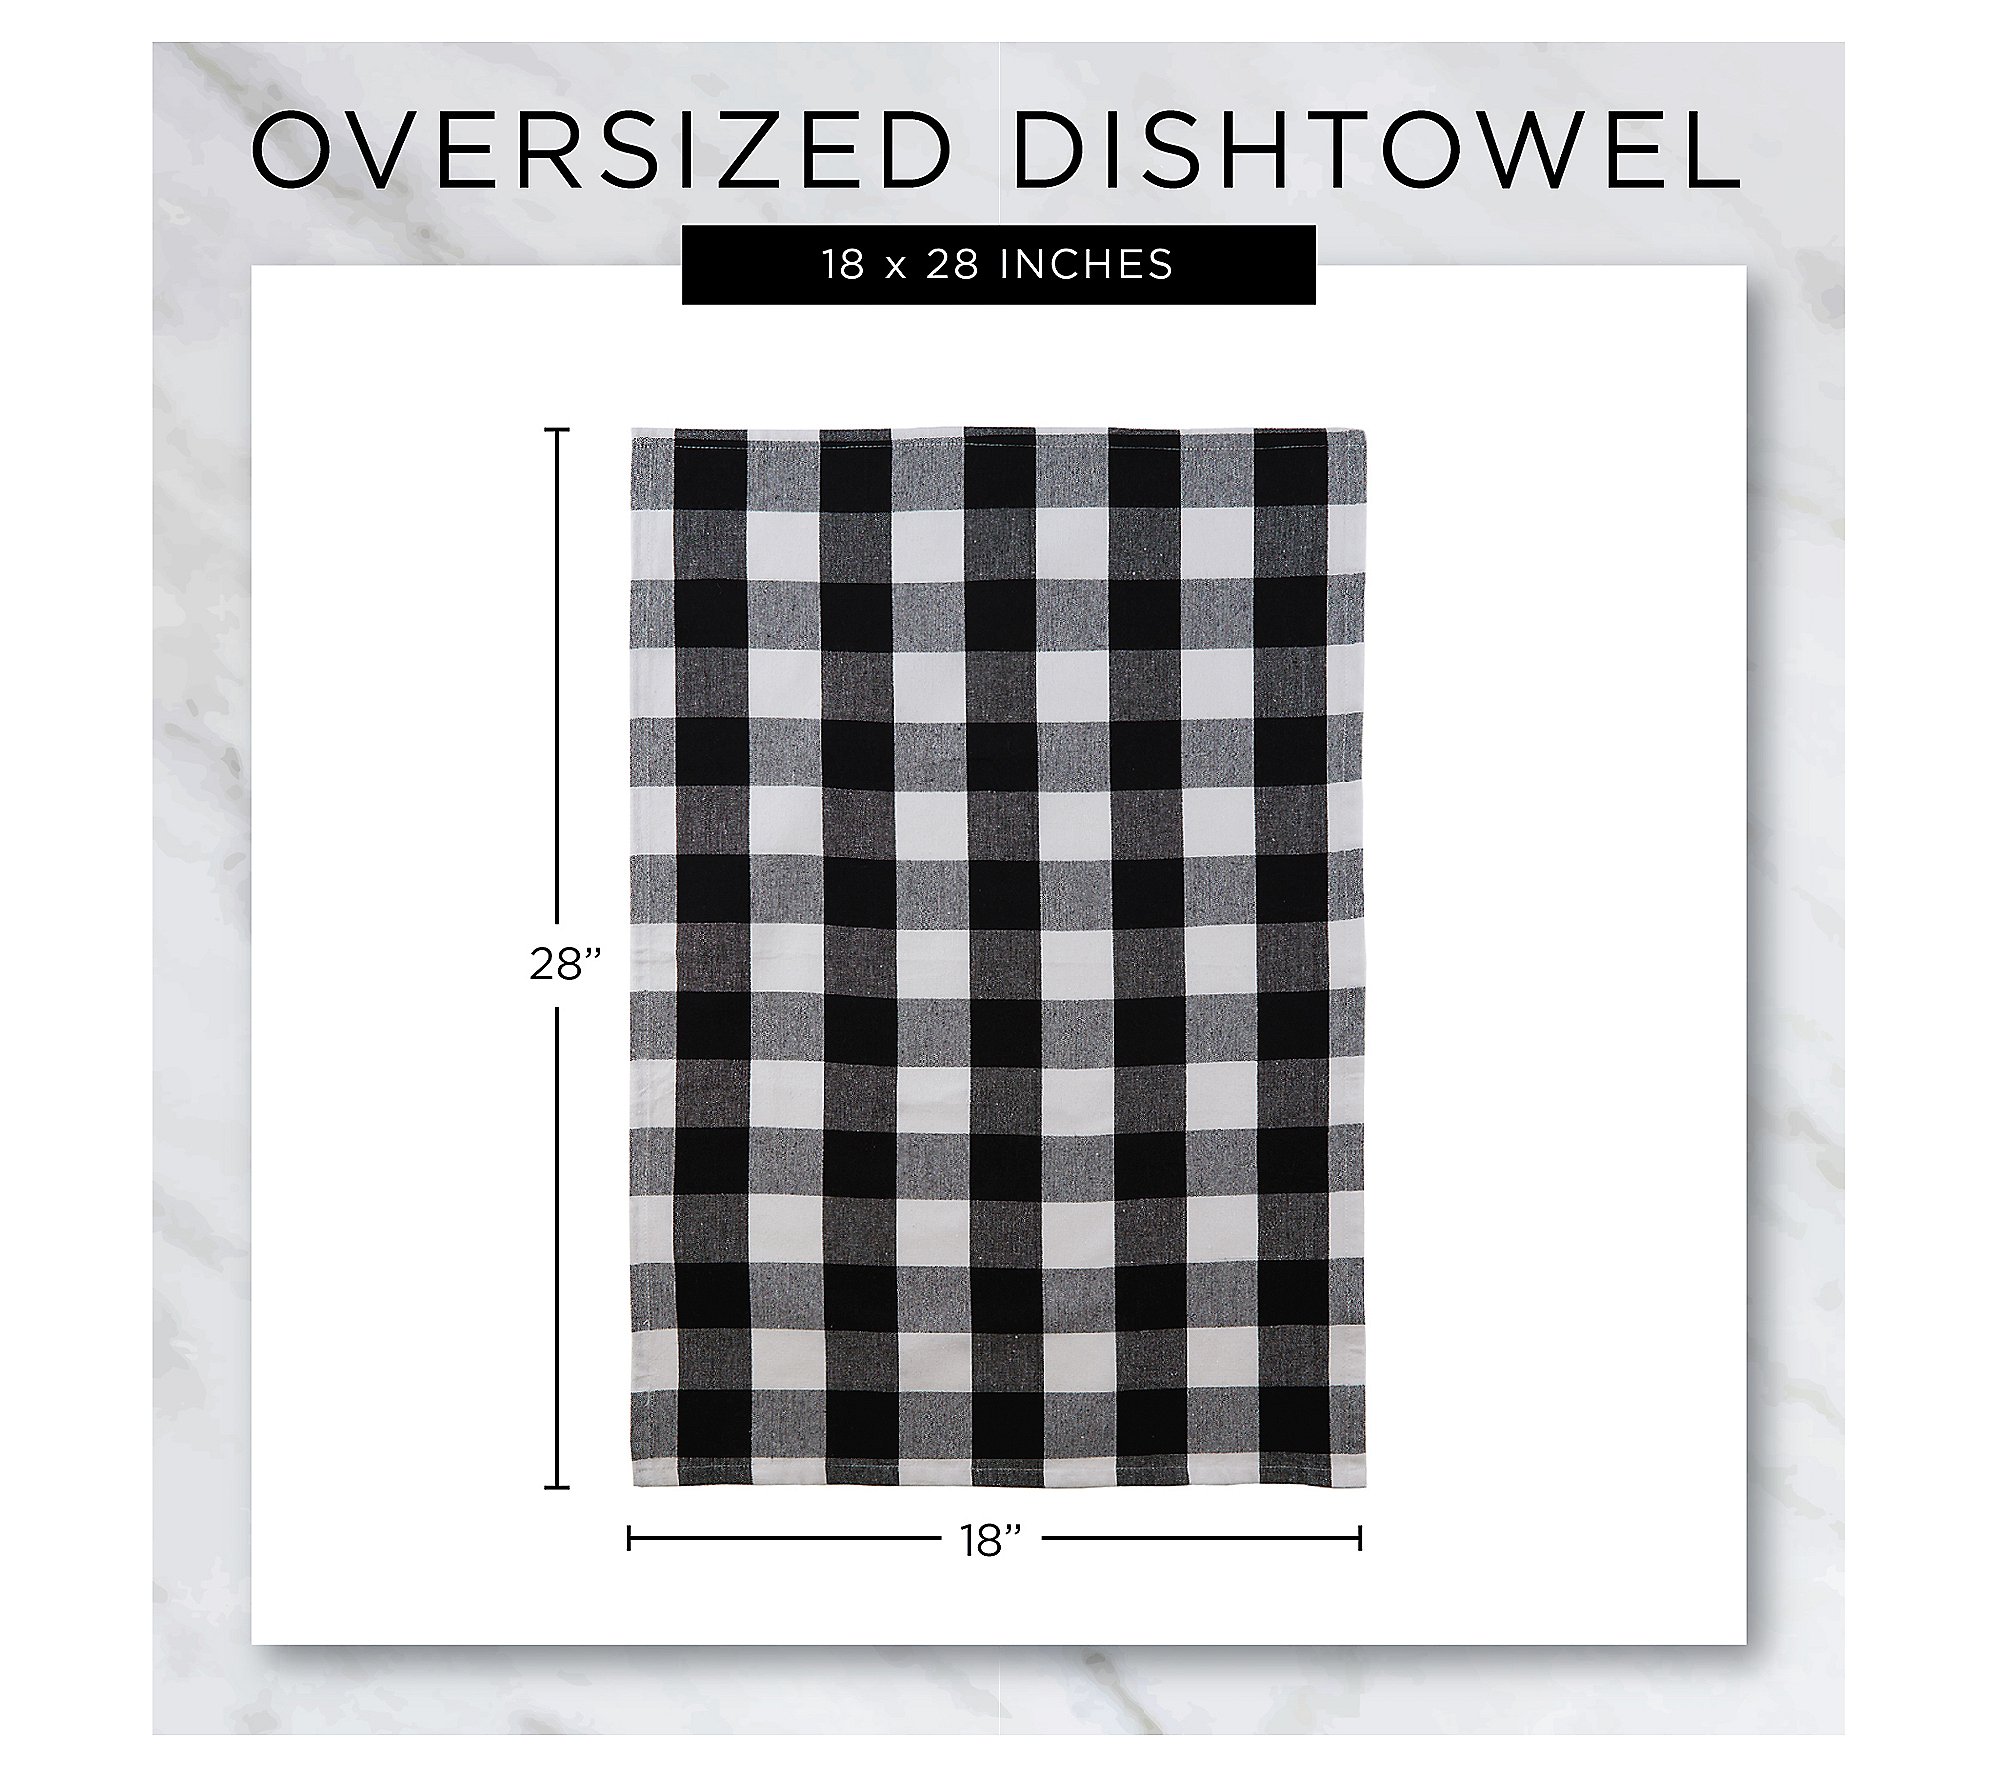 Design Imports (6) Daisy Dobby Kitchen Towel and Dishcloth Set